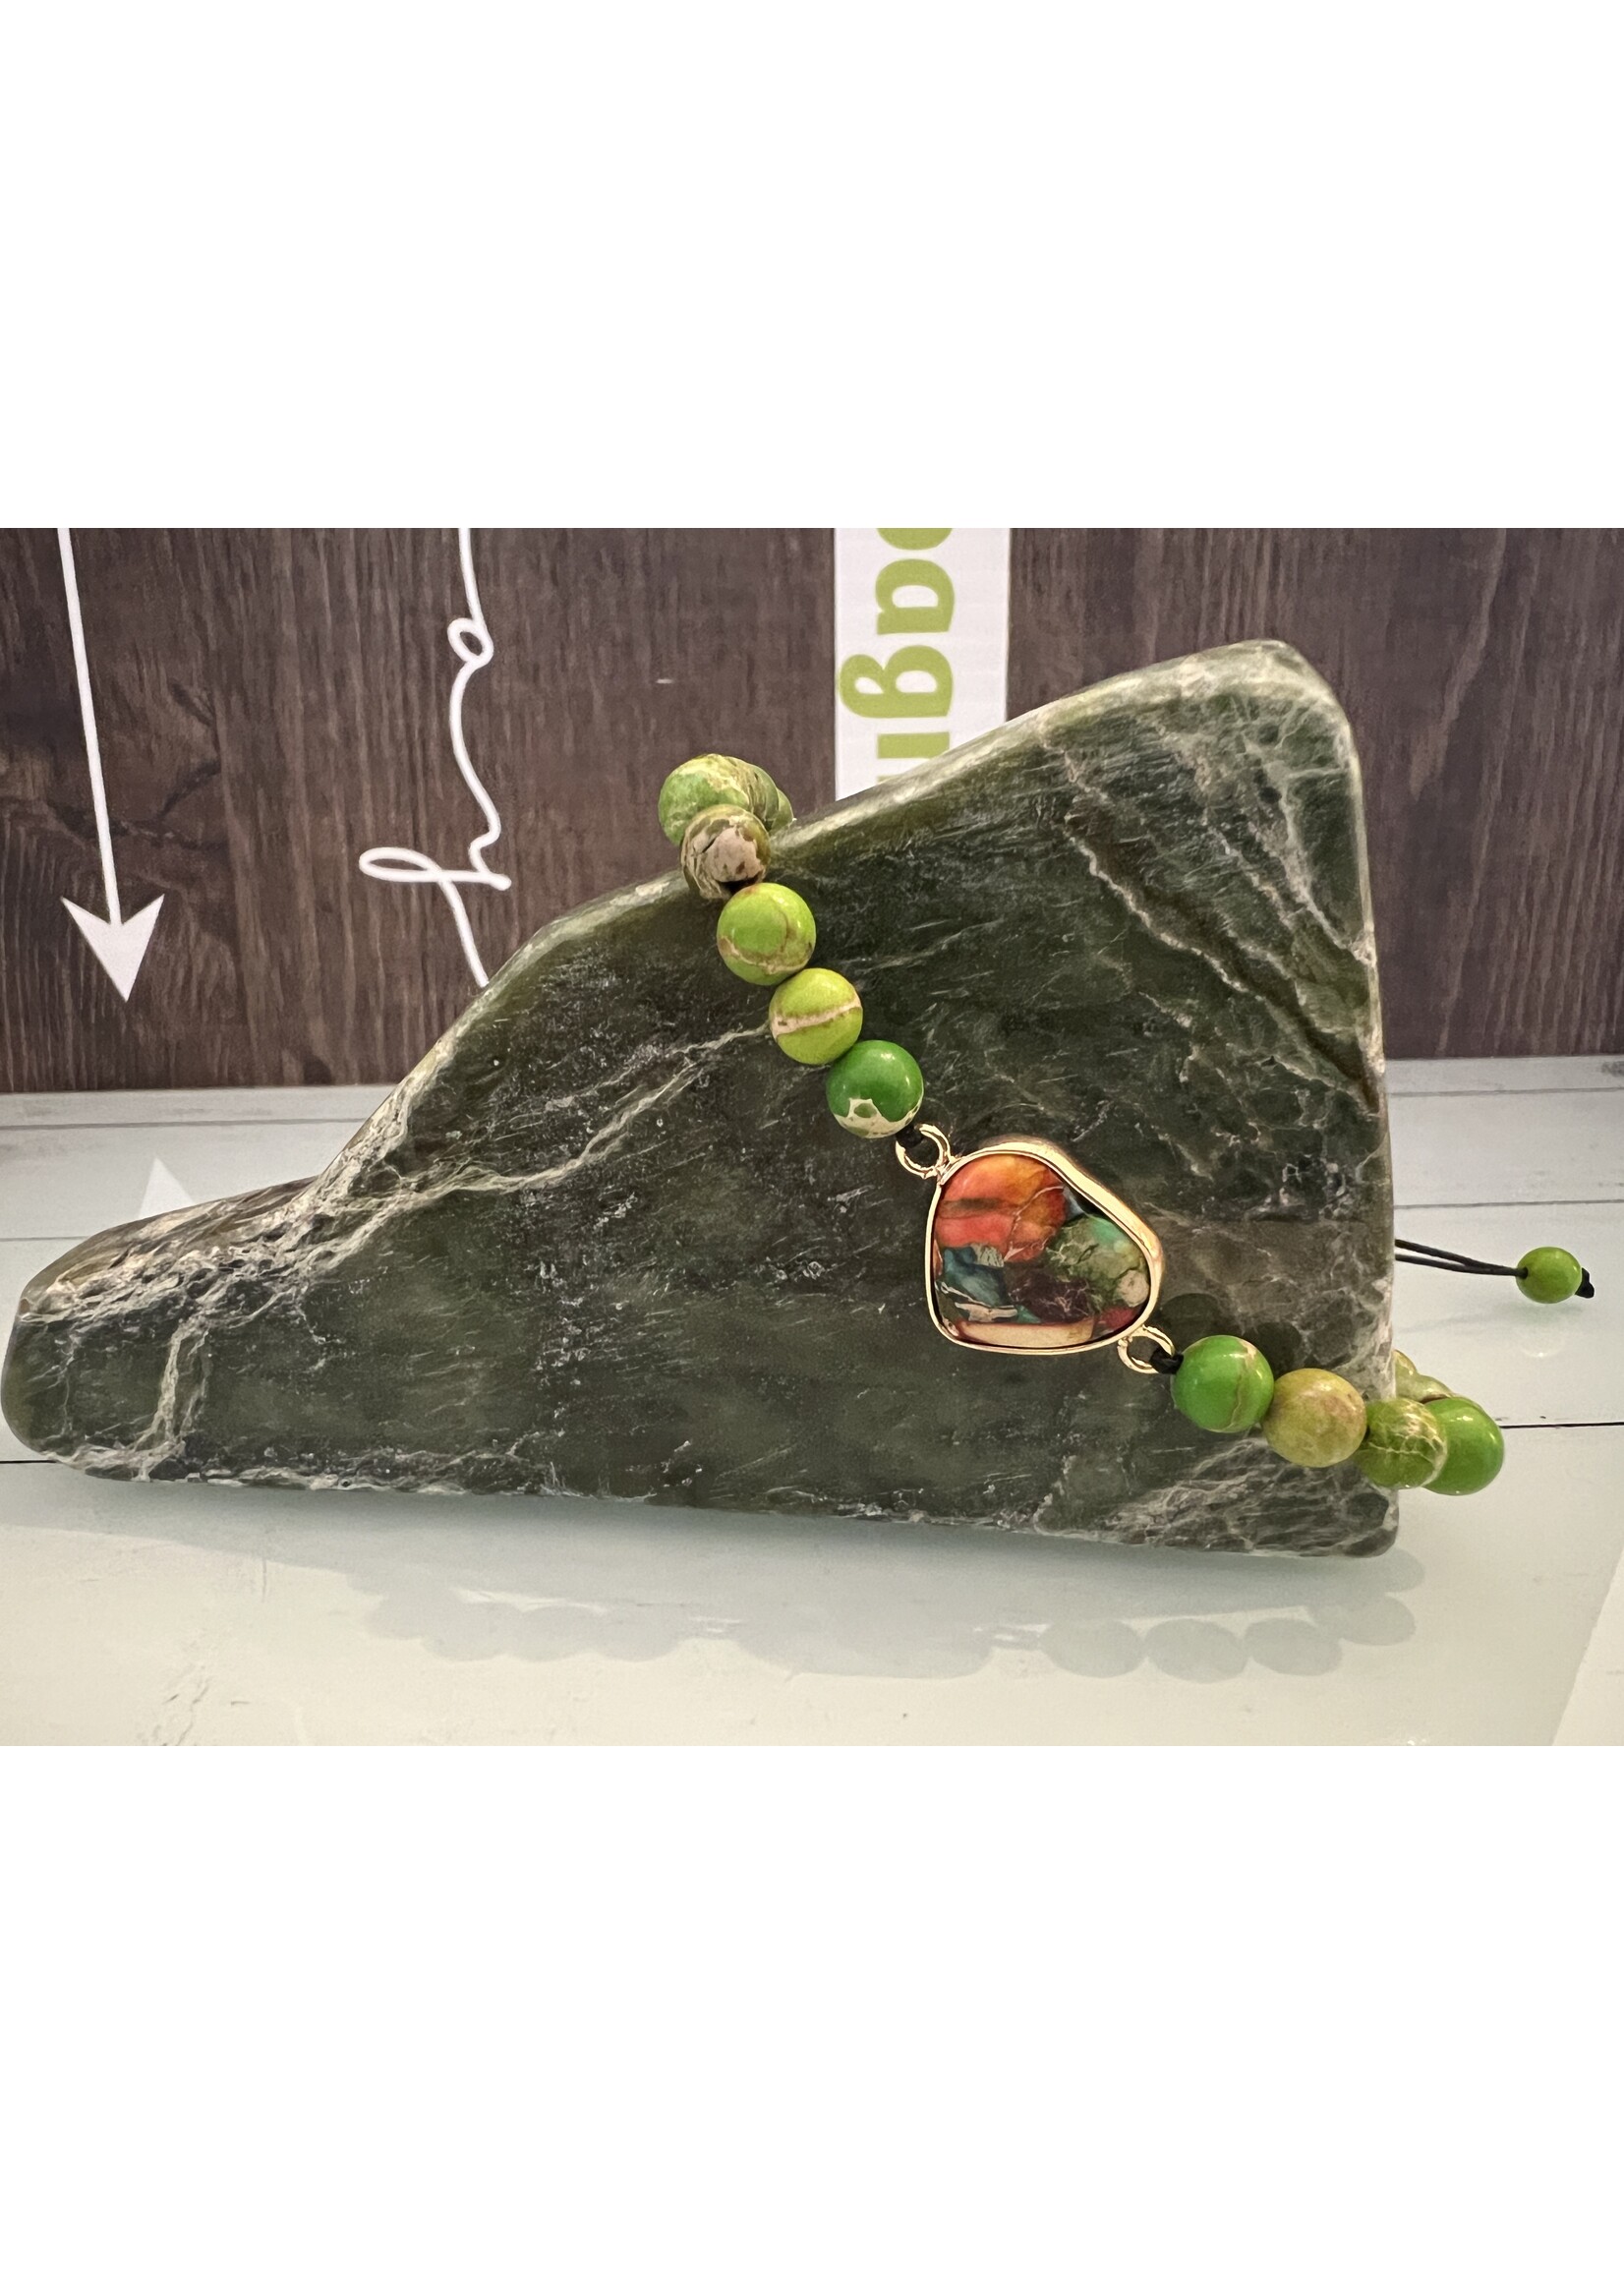 Adjustable Heart Natural Stone Handmade Bracelet - Unisex Wristband with Vibrant Colors